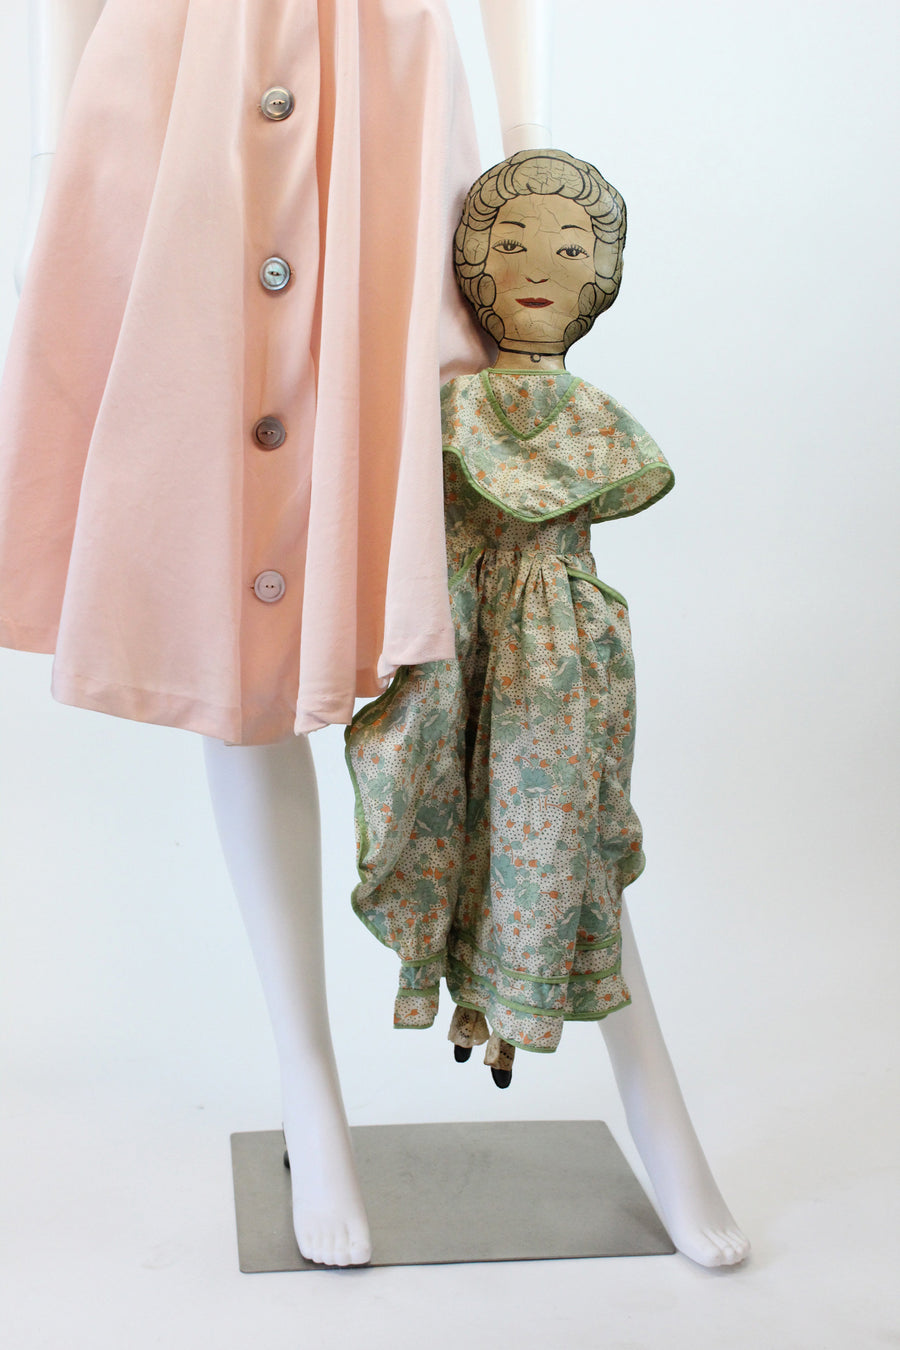 1920s doll purse large | feedsack dress handbag